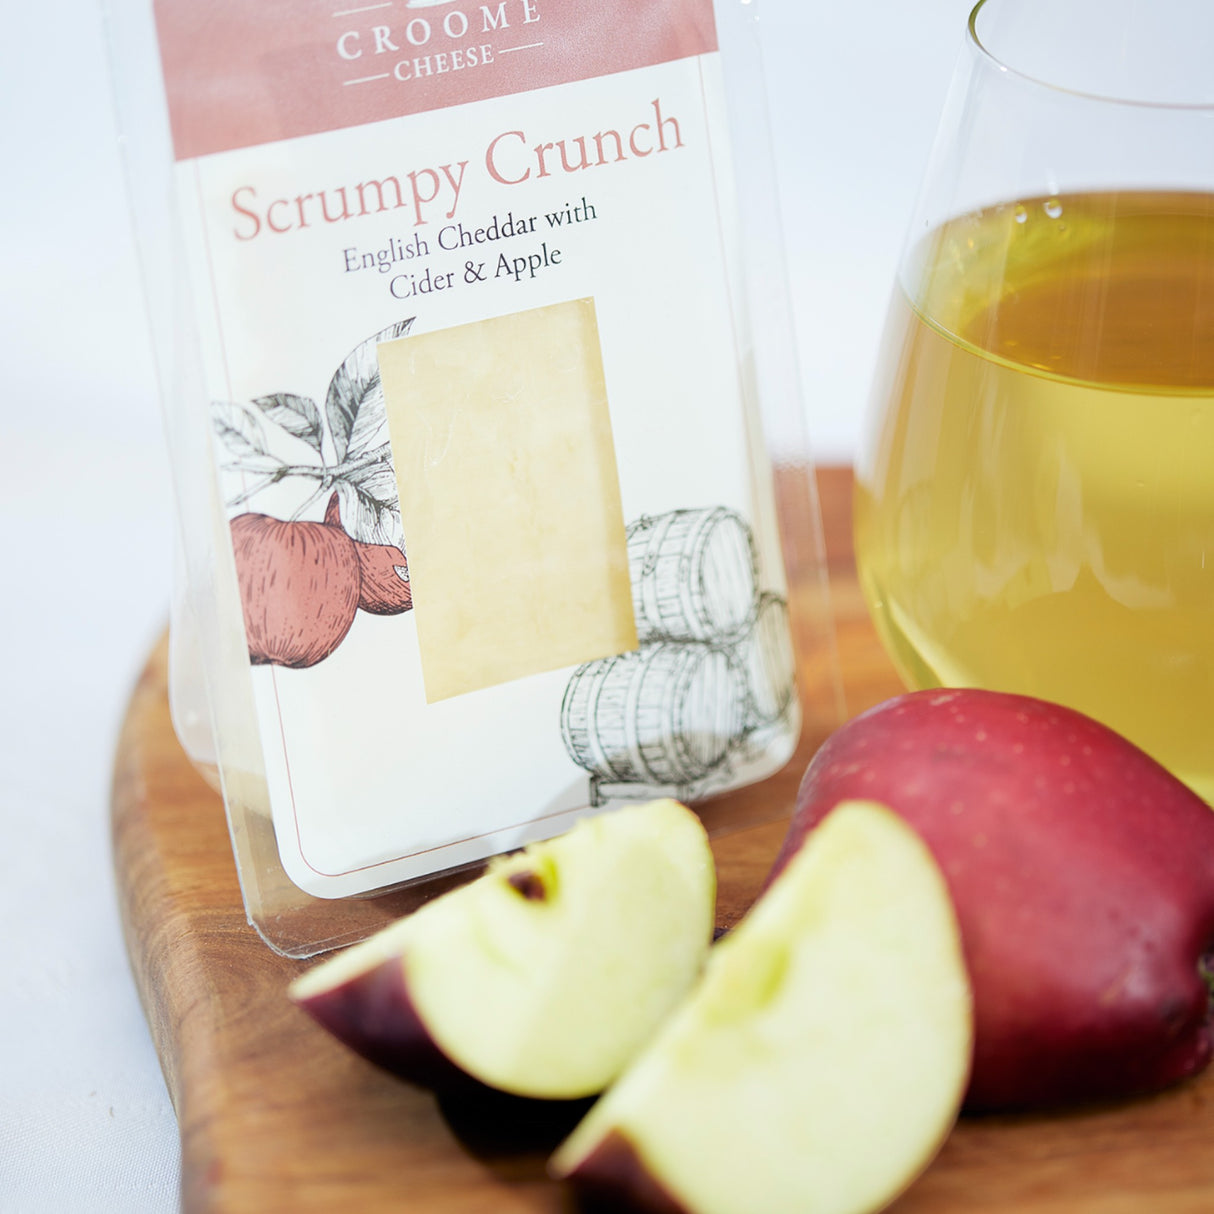 Croome Cuisine - The Scrumpy Crunch (Cider & Apple) 150g